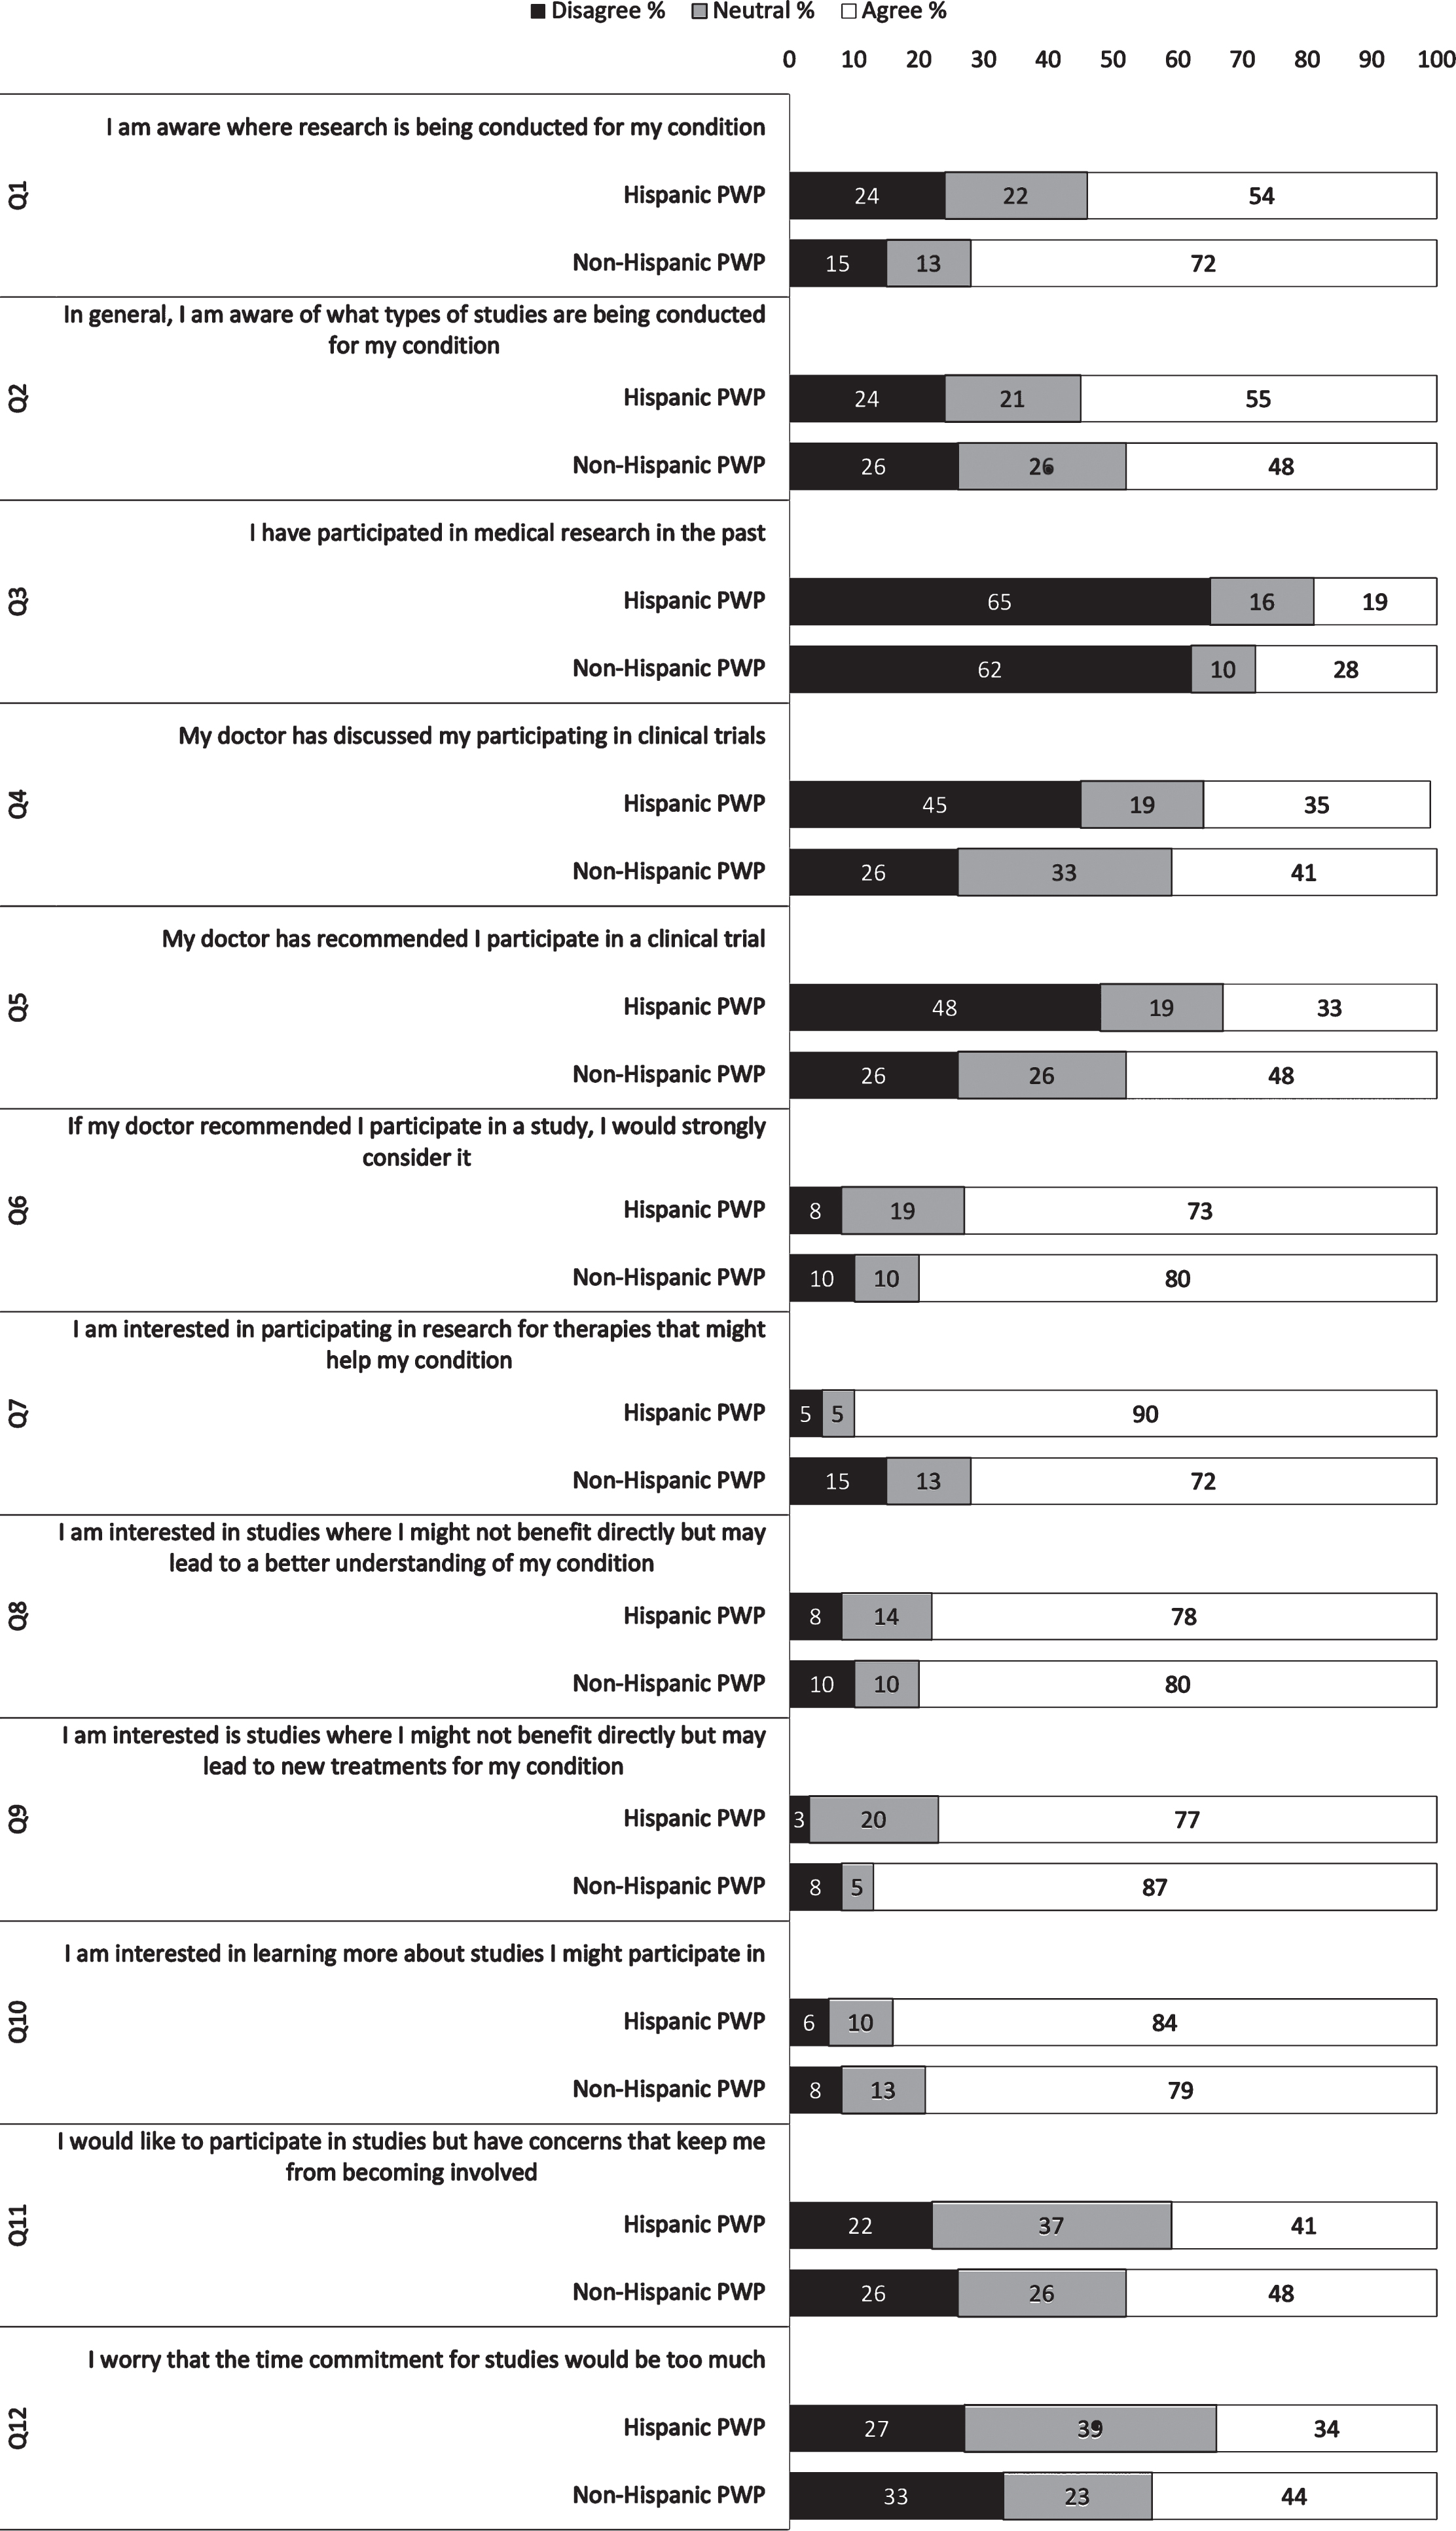 Survey responses of Hispanic and non-Hispanic PWP compared using categorical data.